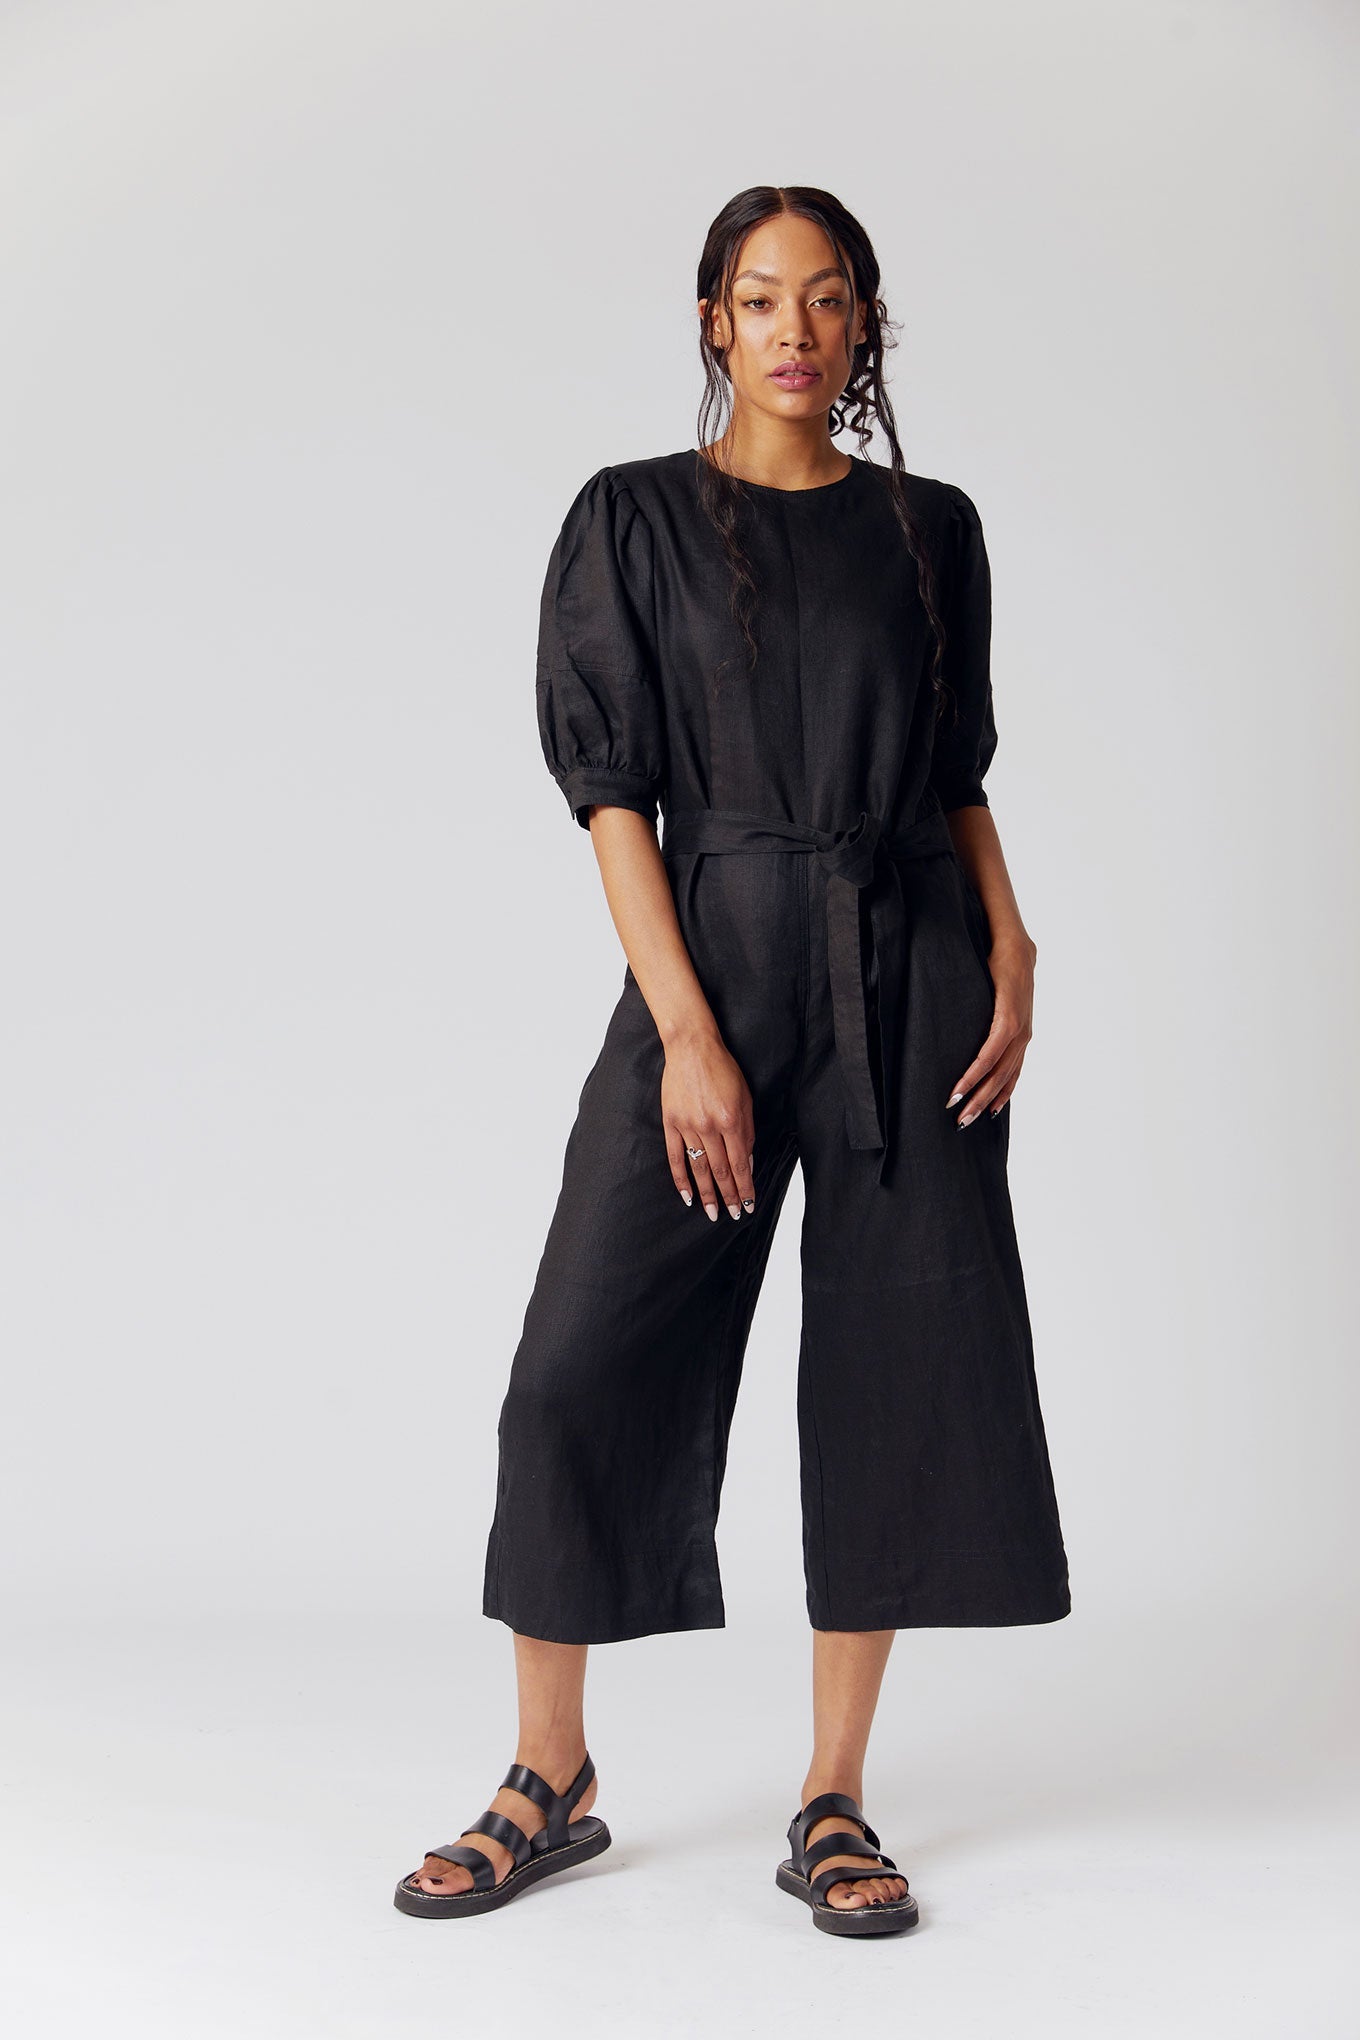 FAYE Organic Linen Jumpsuit Black, SIZE 2 / UK 10 / EUR 38